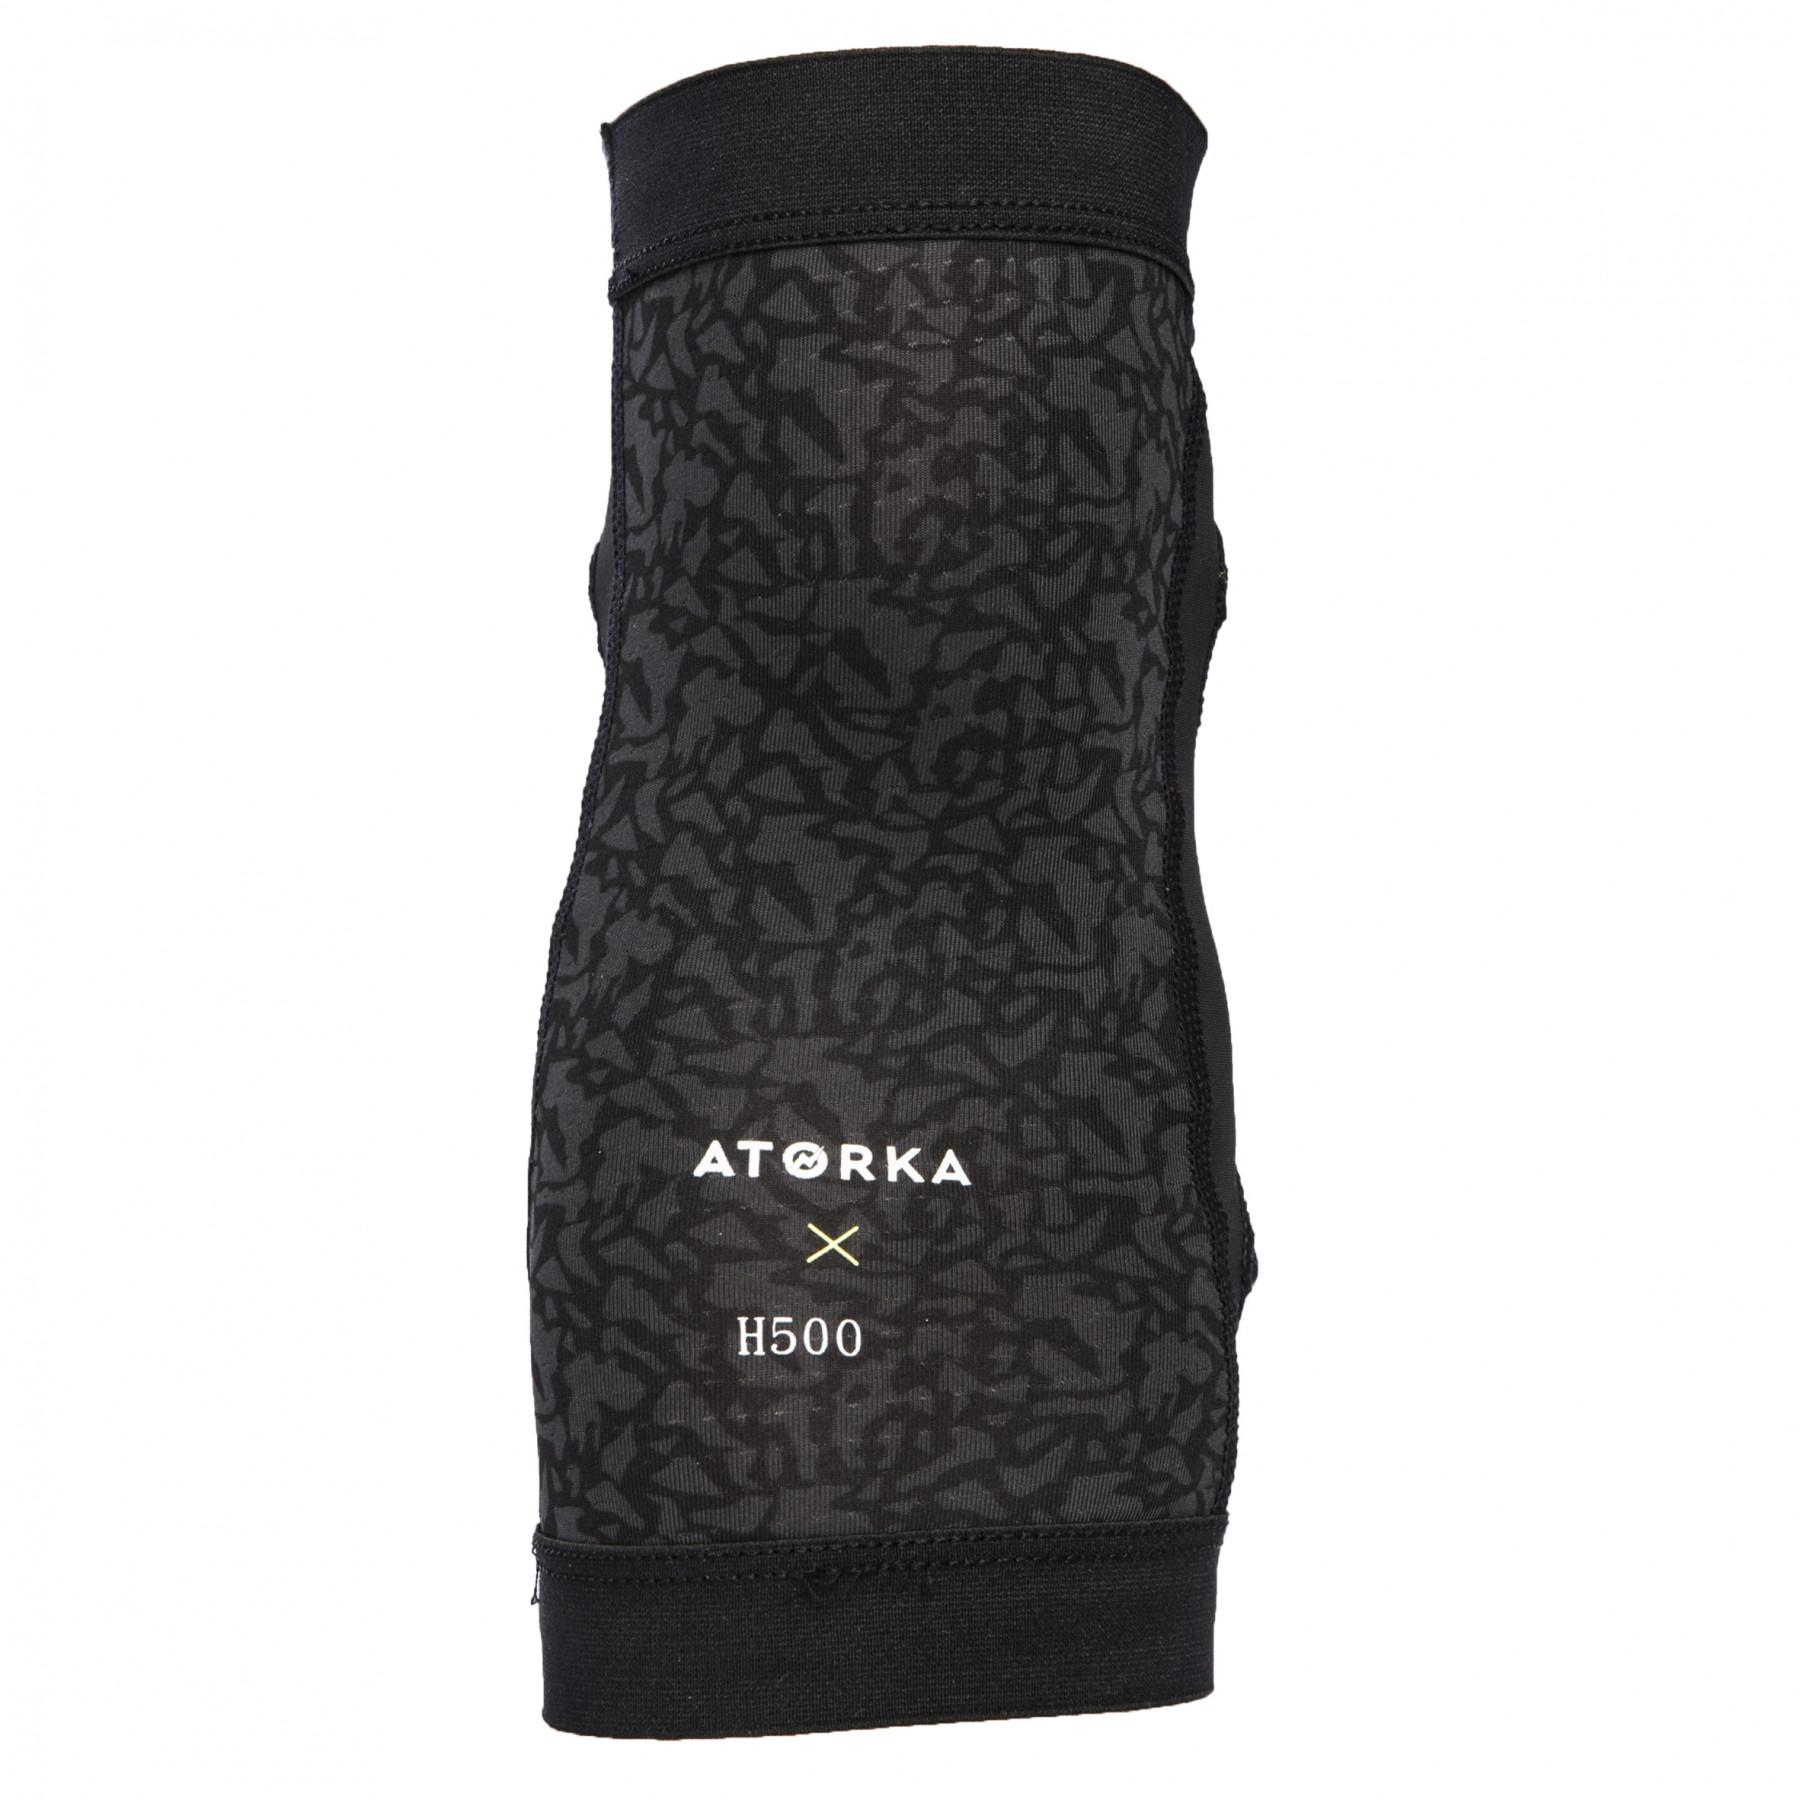 Elbow pads Atorka H500